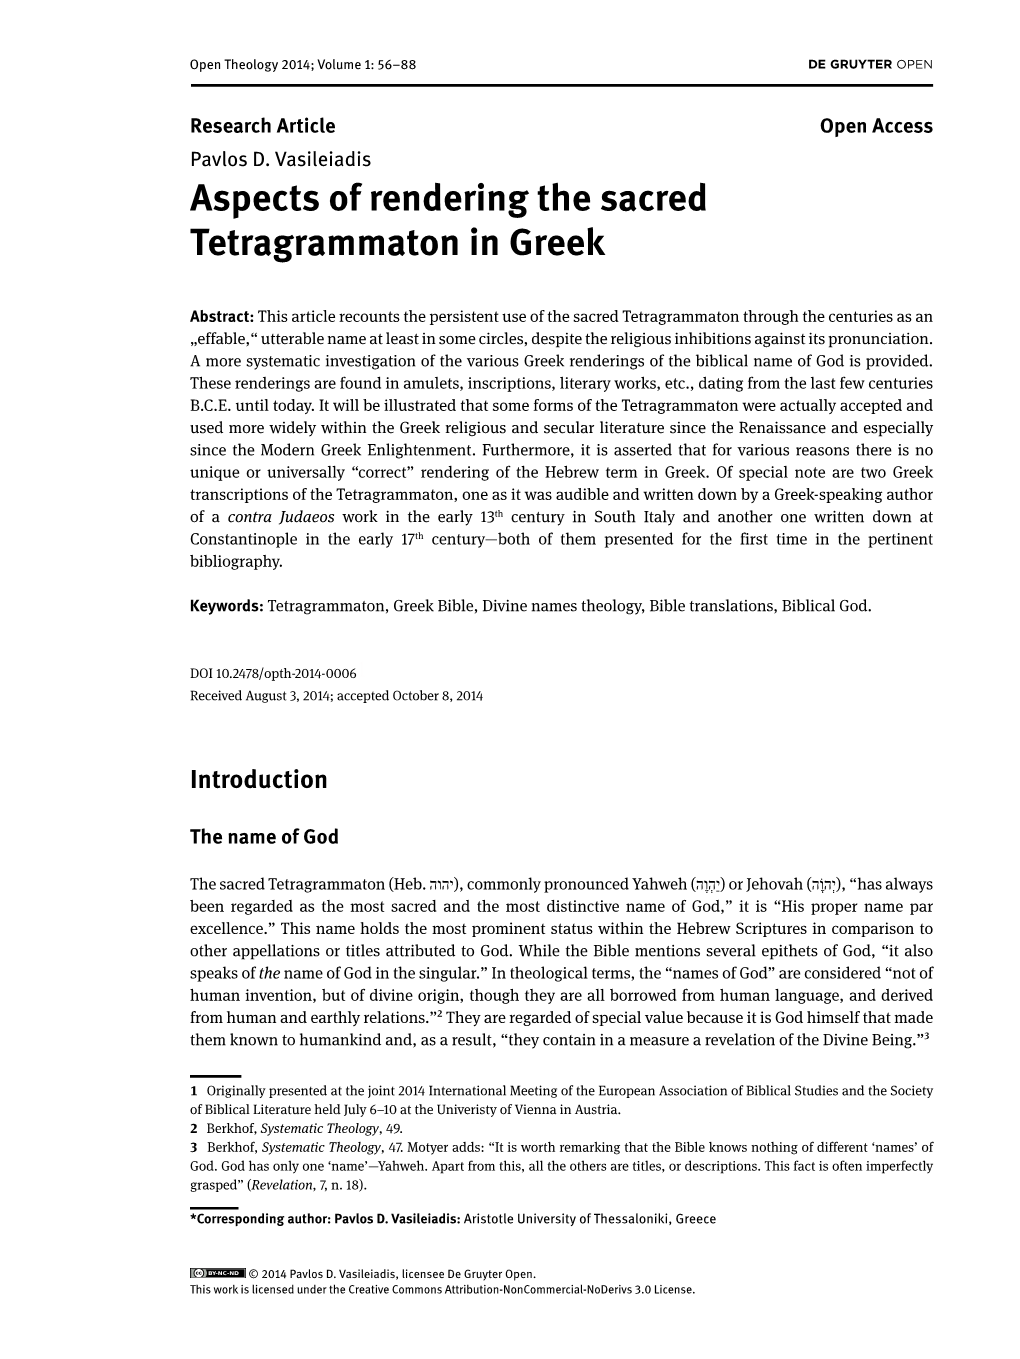 Aspects of Rendering the Sacred Tetragrammaton in Greek